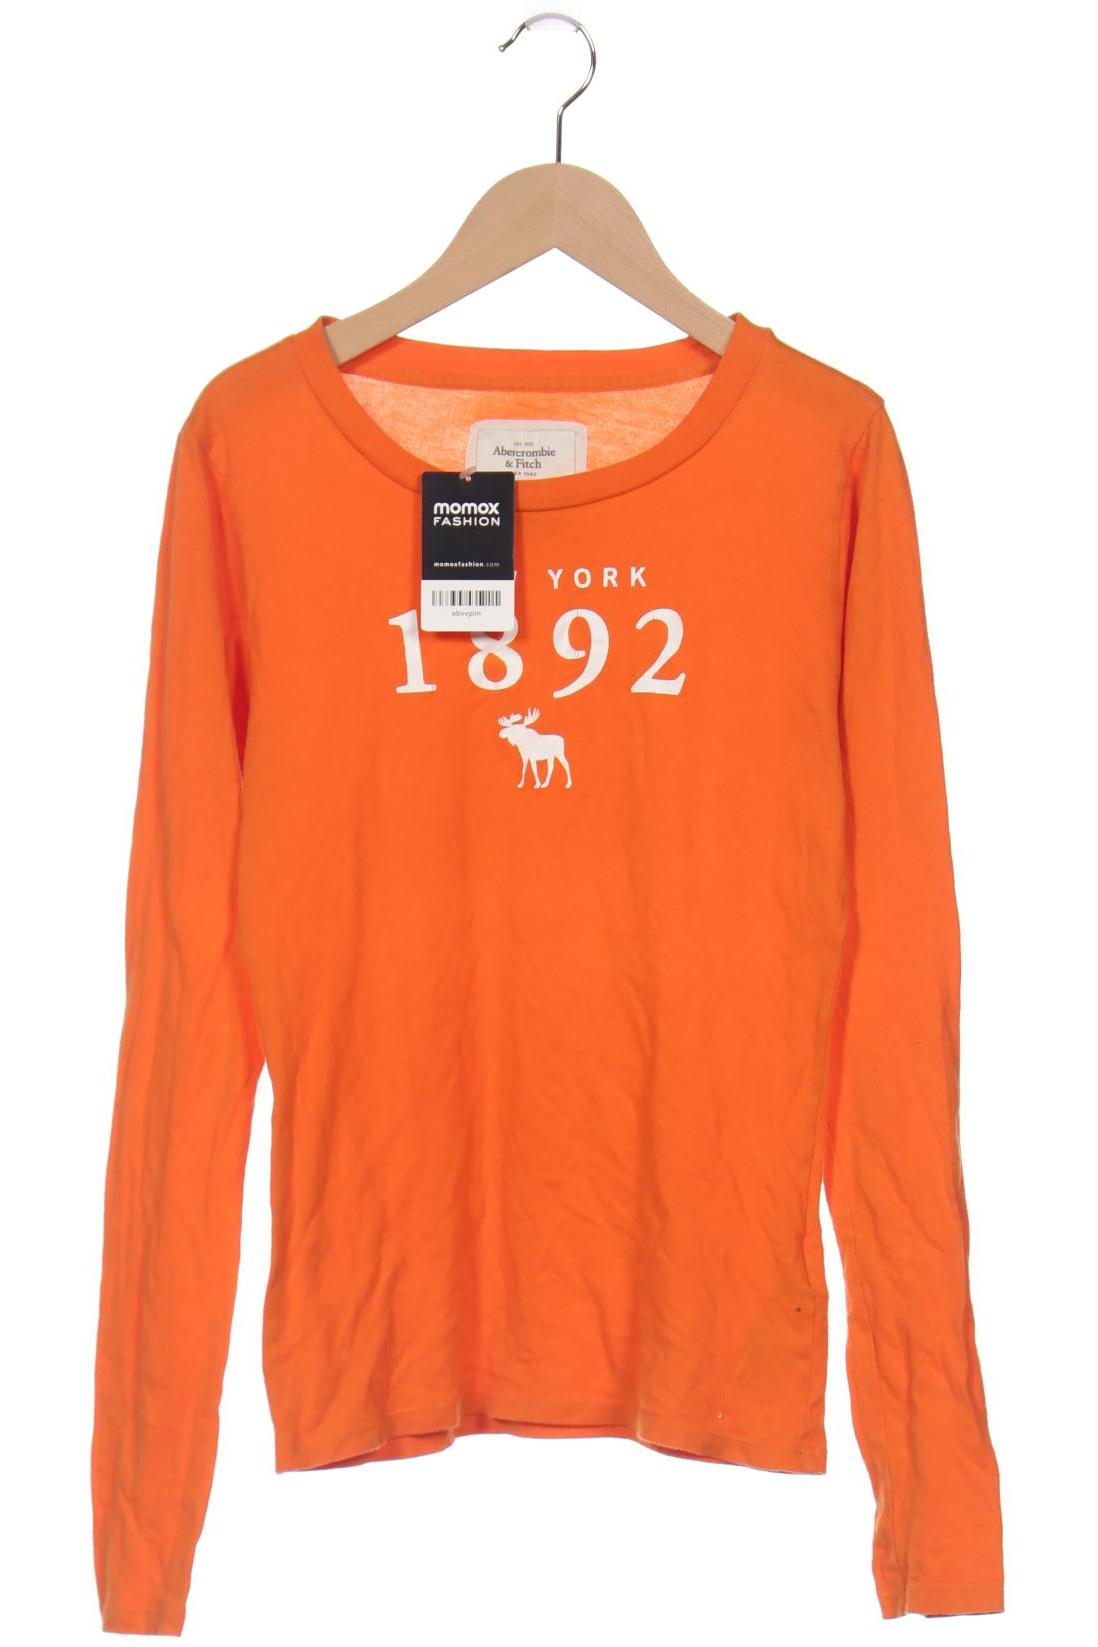 Abercrombie & Fitch Damen Langarmshirt, orange von Abercrombie & Fitch